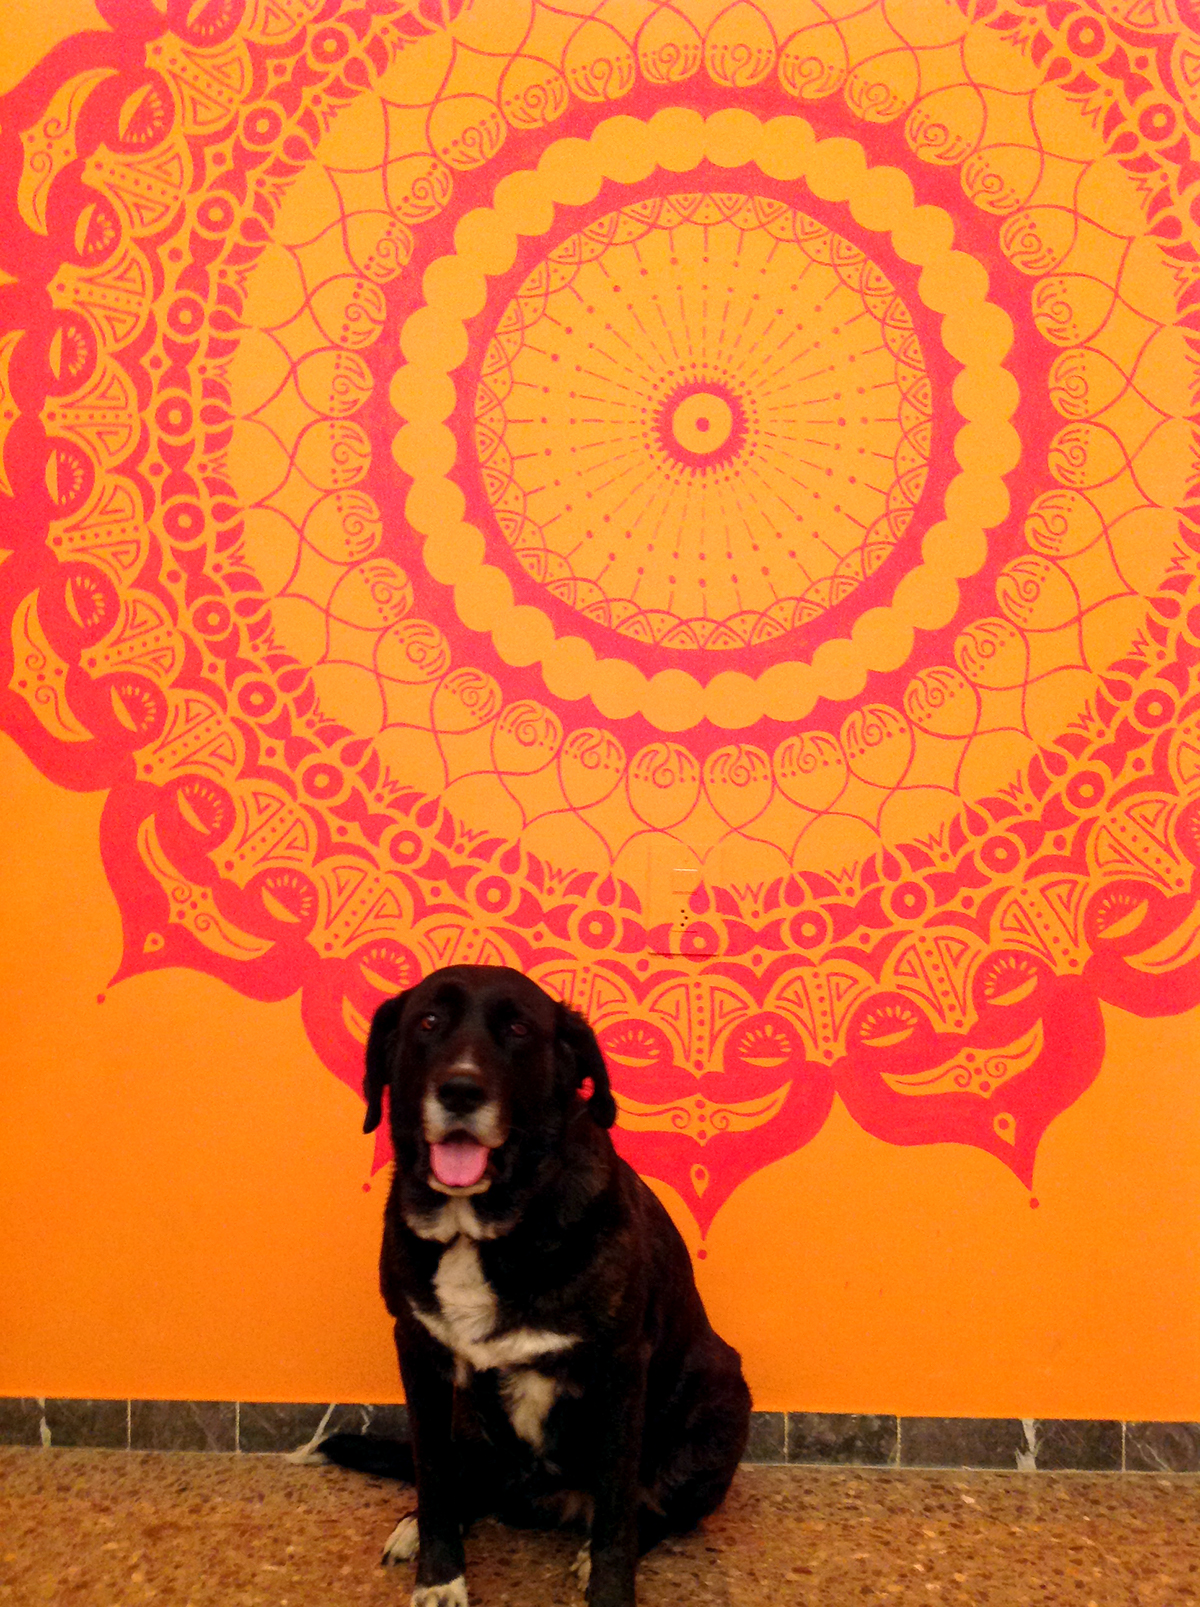 Mandala wall wallpainting meditation pared Posca red